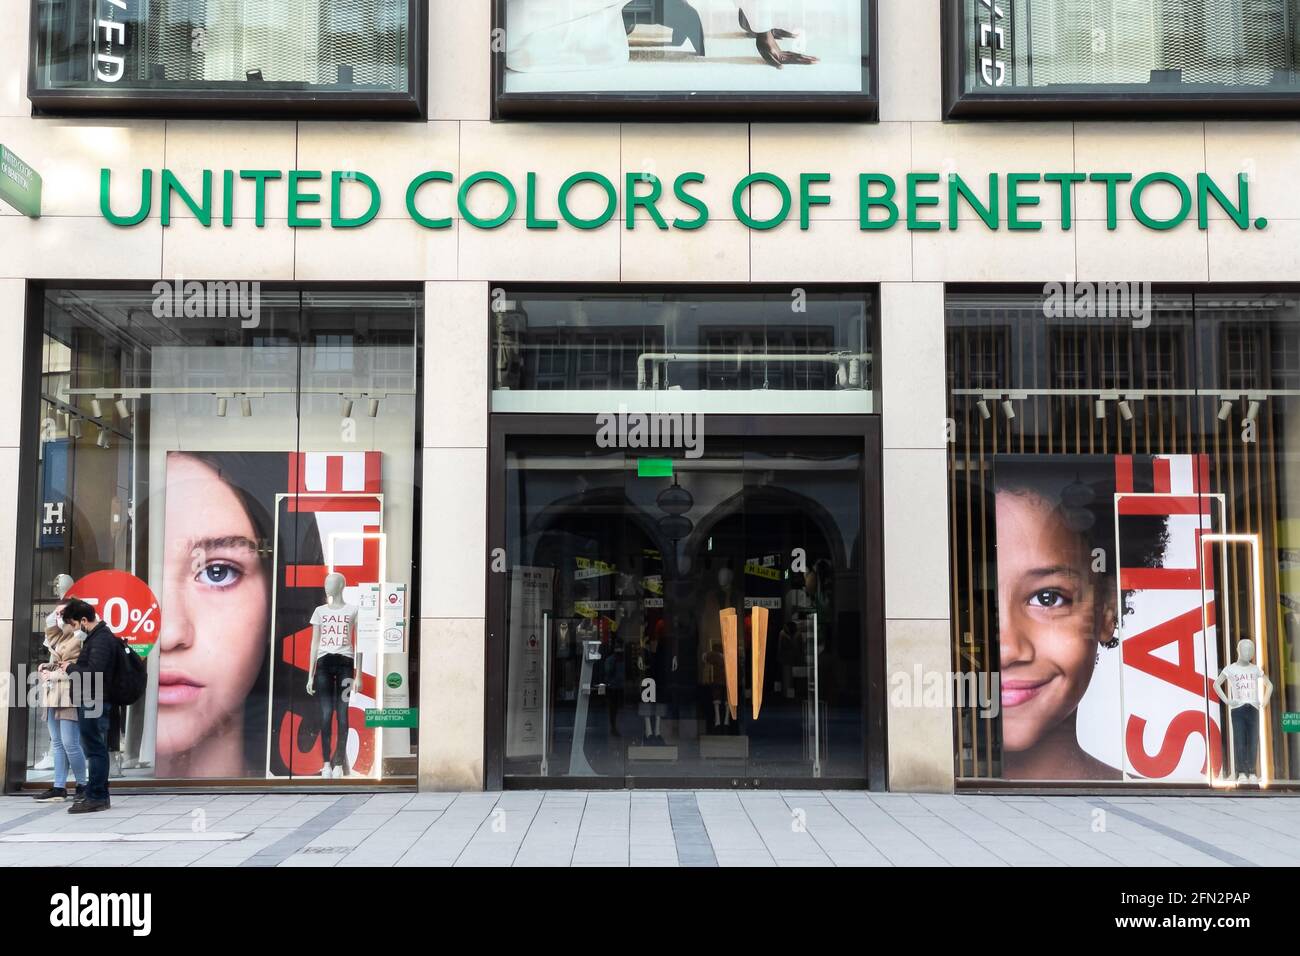 United Colors of Benetton sore in Munich Stock Photo - Alamy